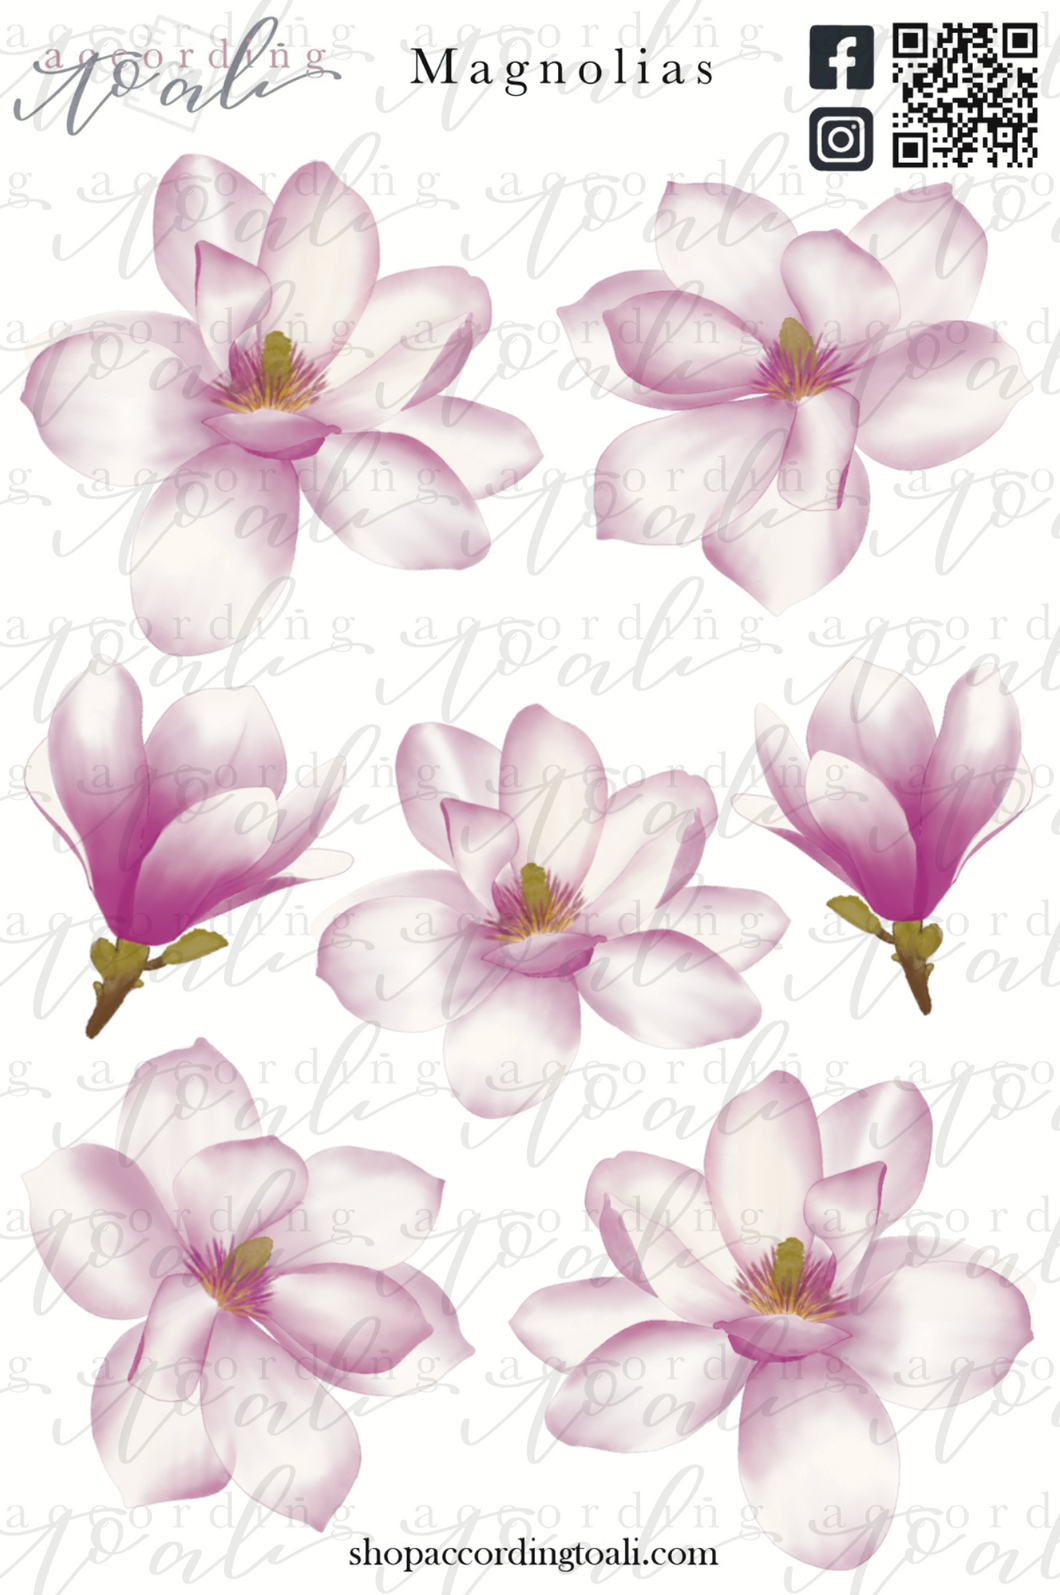 Magnolias Sticker Sheet